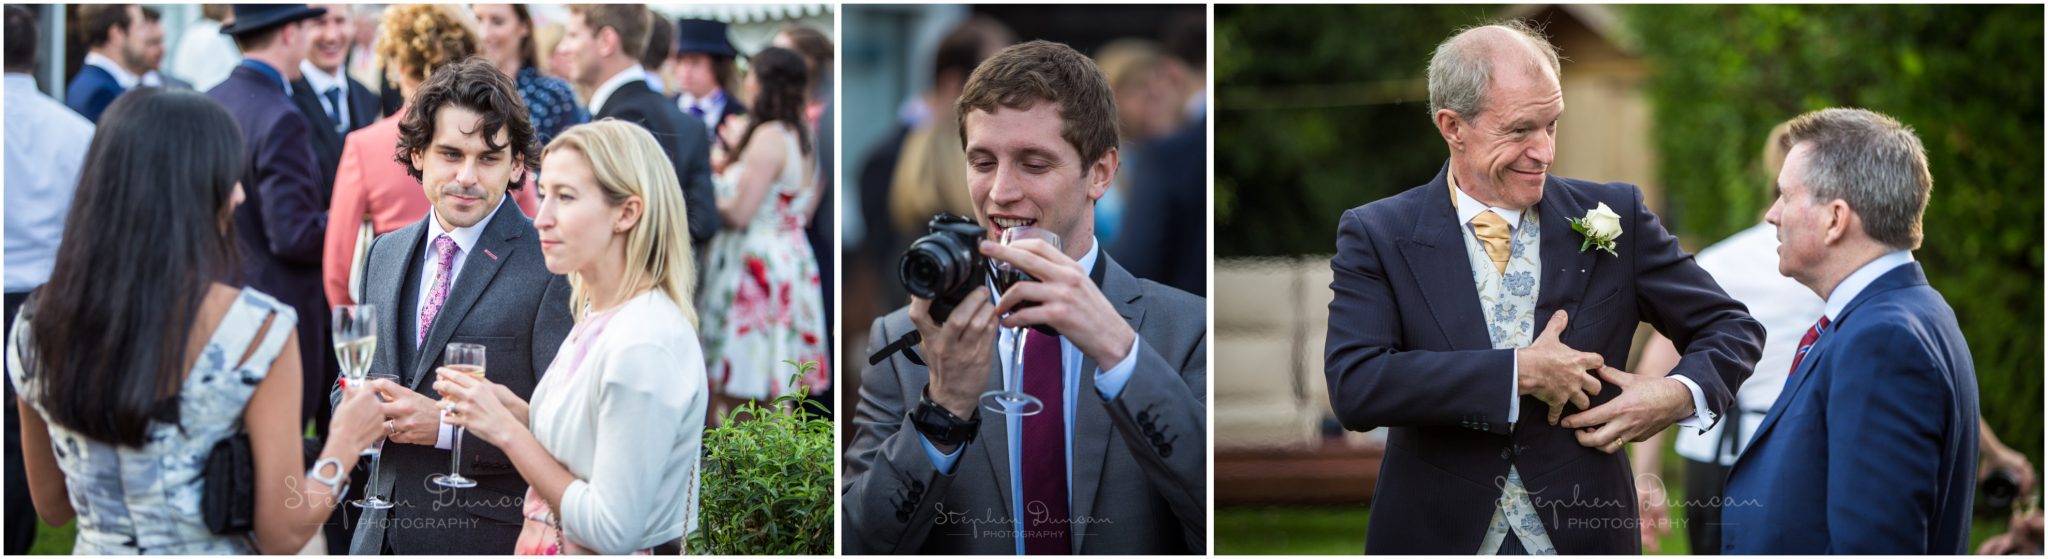 Lymington wedding photography guests at reception